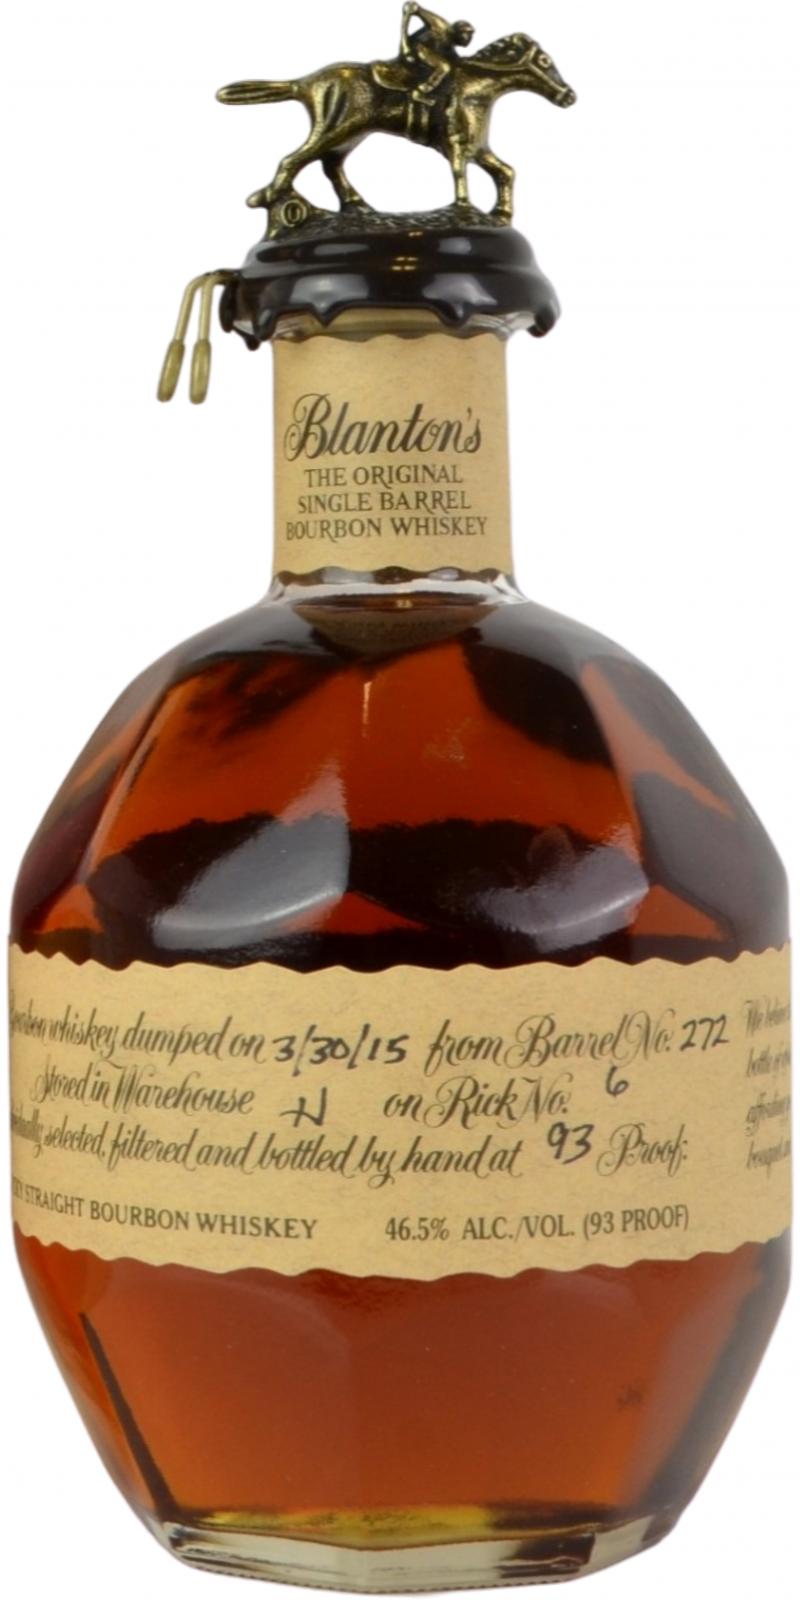 Blanton's The Original Single Barrel Bourbon Whisky #272 46.5% 700ml